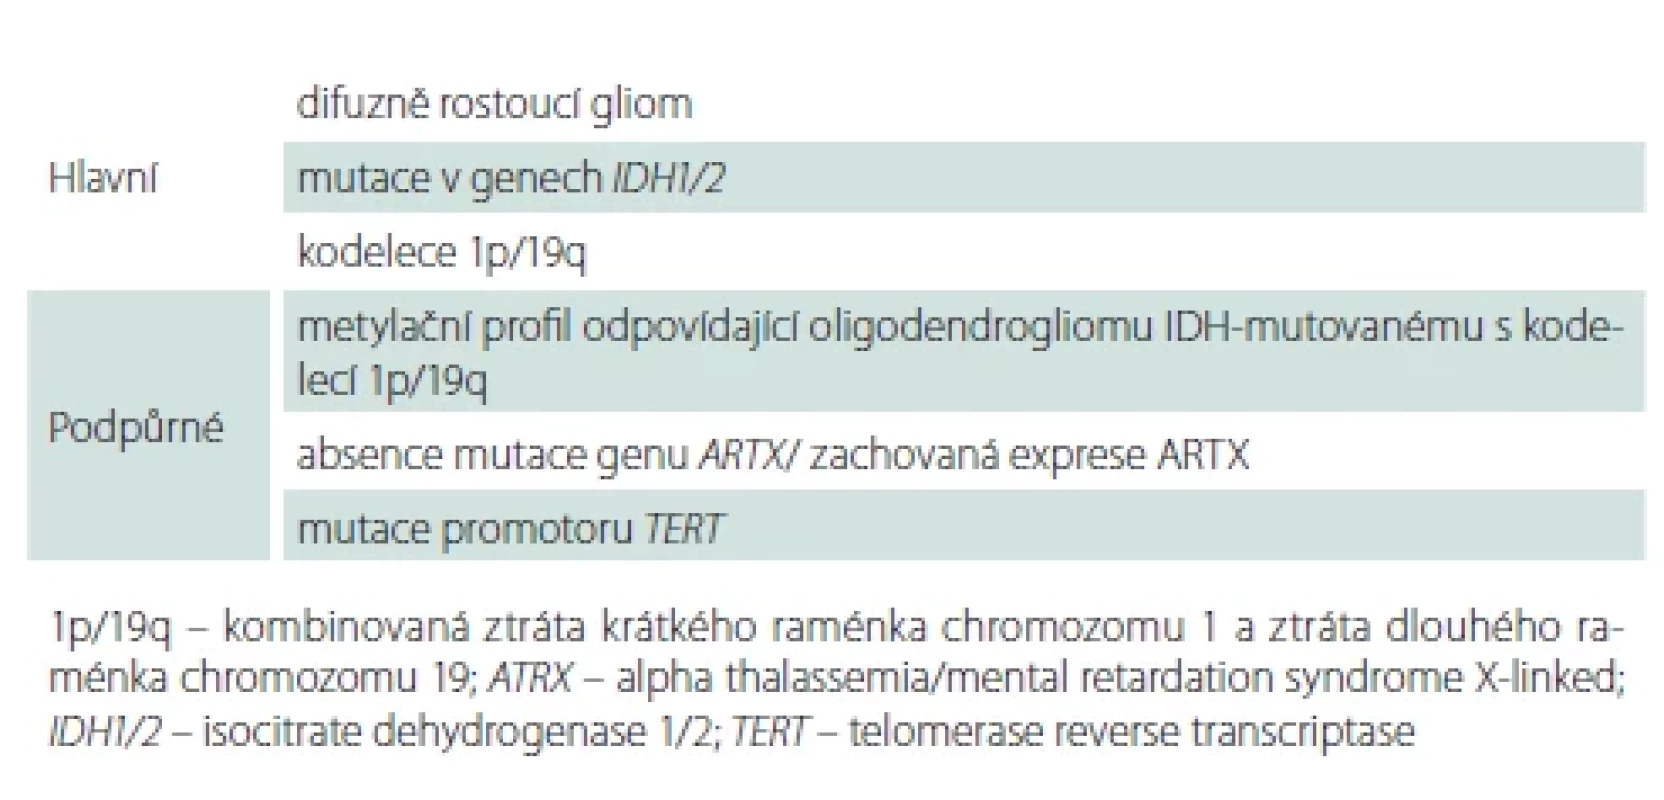 Diagnostická kritéria pro oligodendrogliom IDH-mutovaný s kodelecí 1p/19q dle WHO.